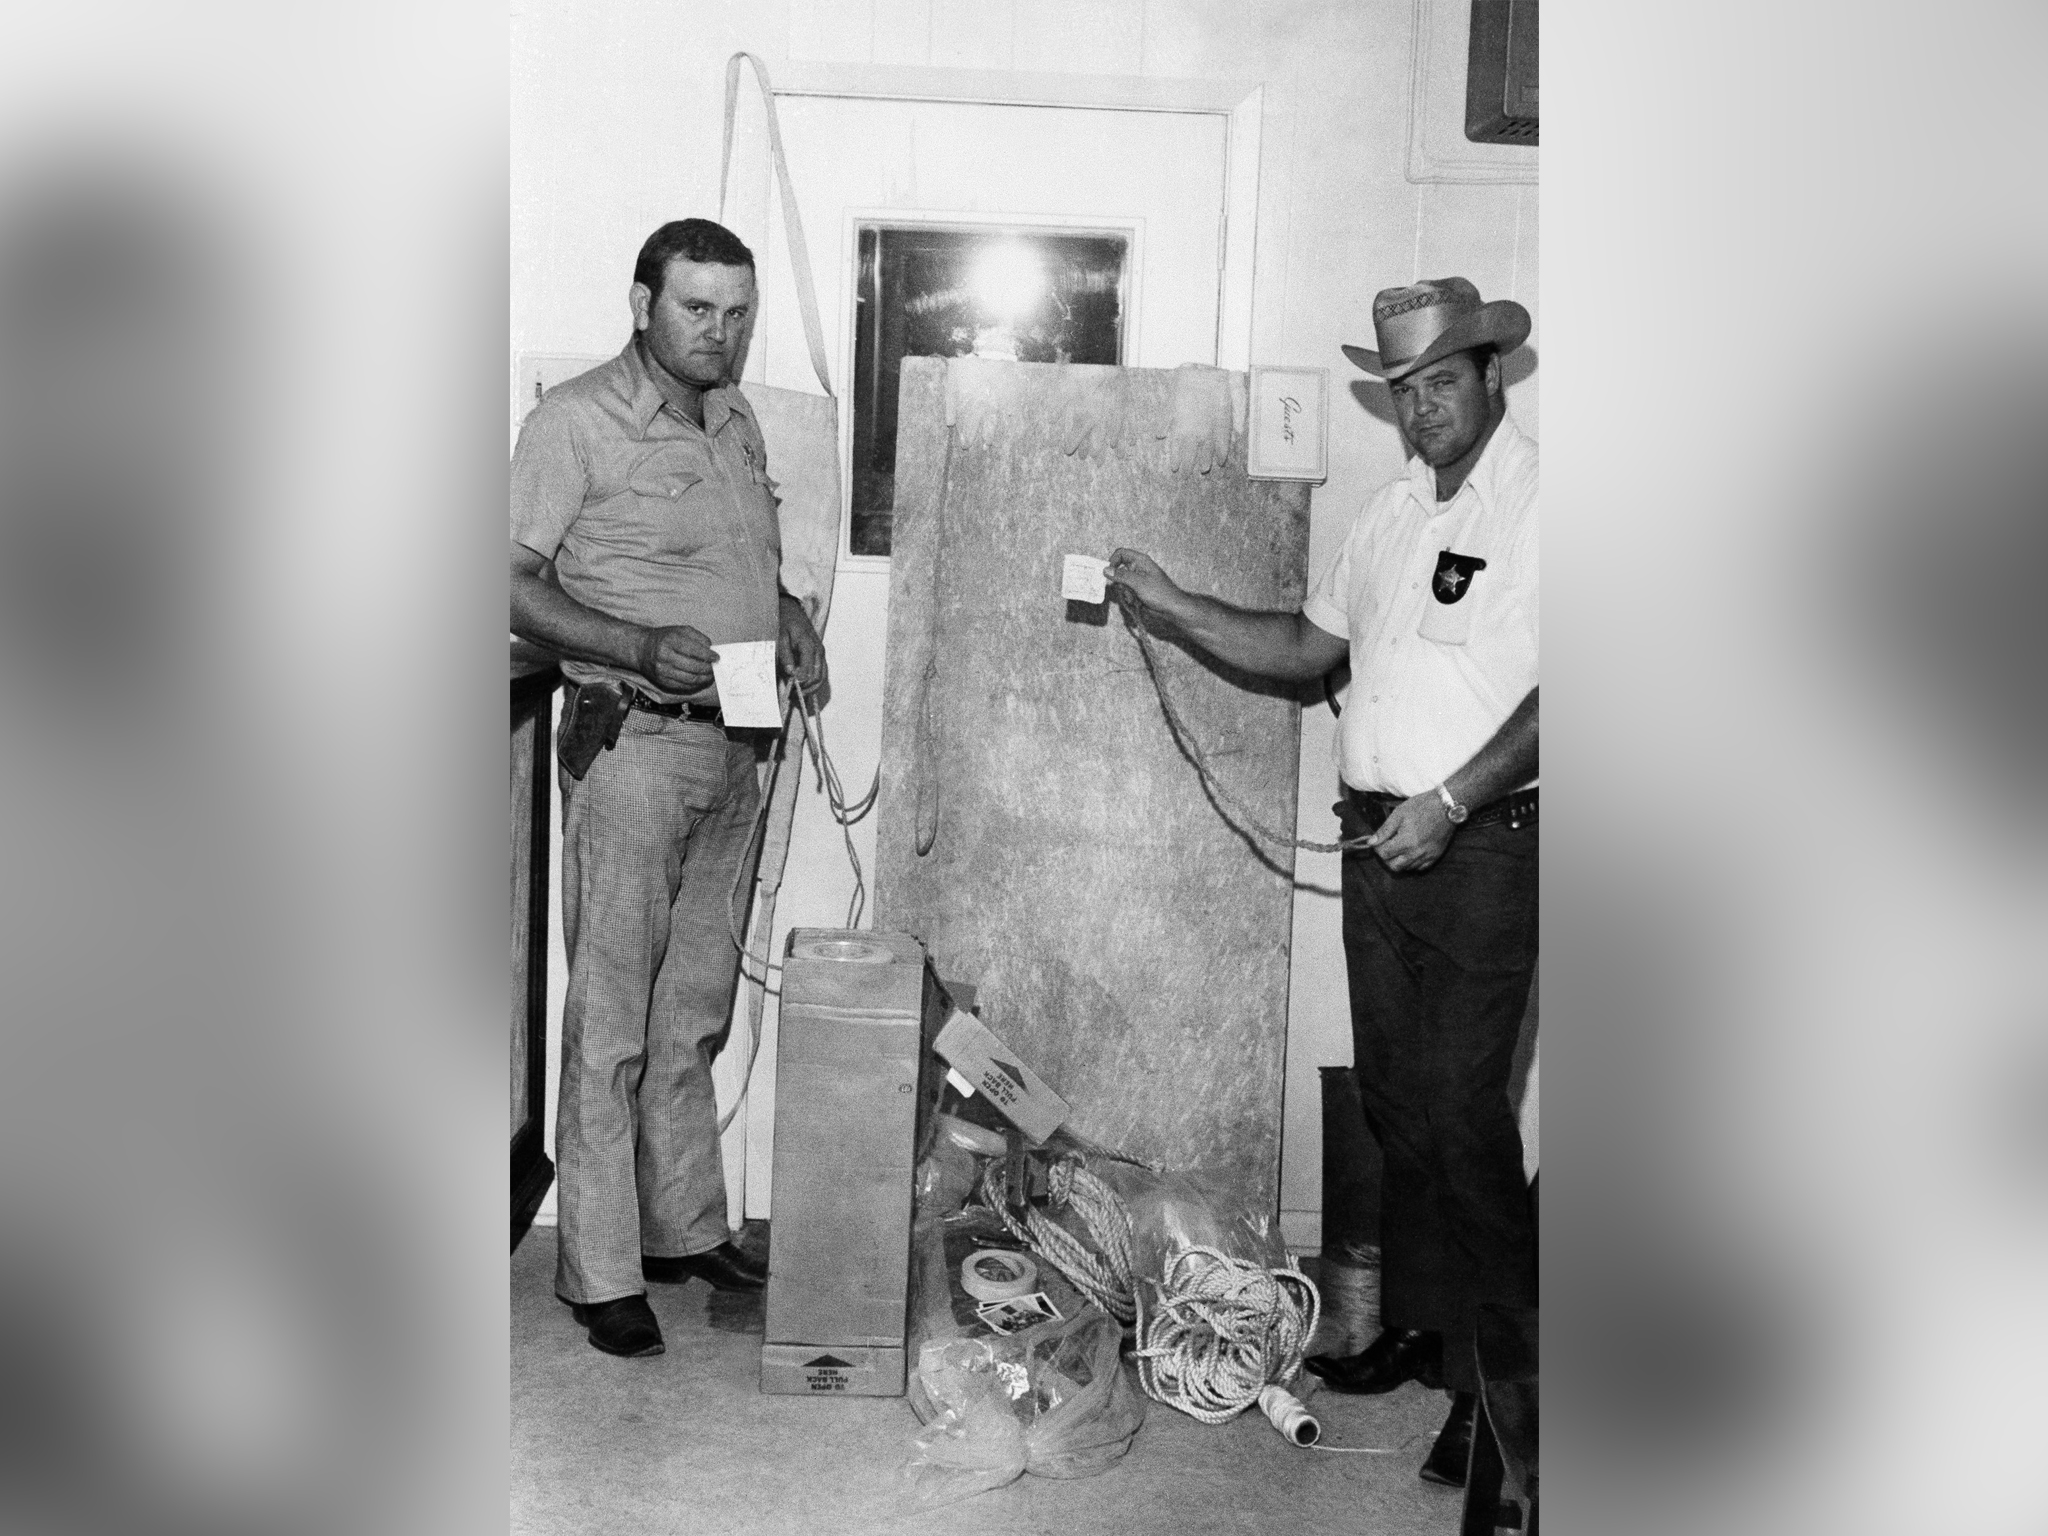 louisiana serial killer ron robert murdered in colorado